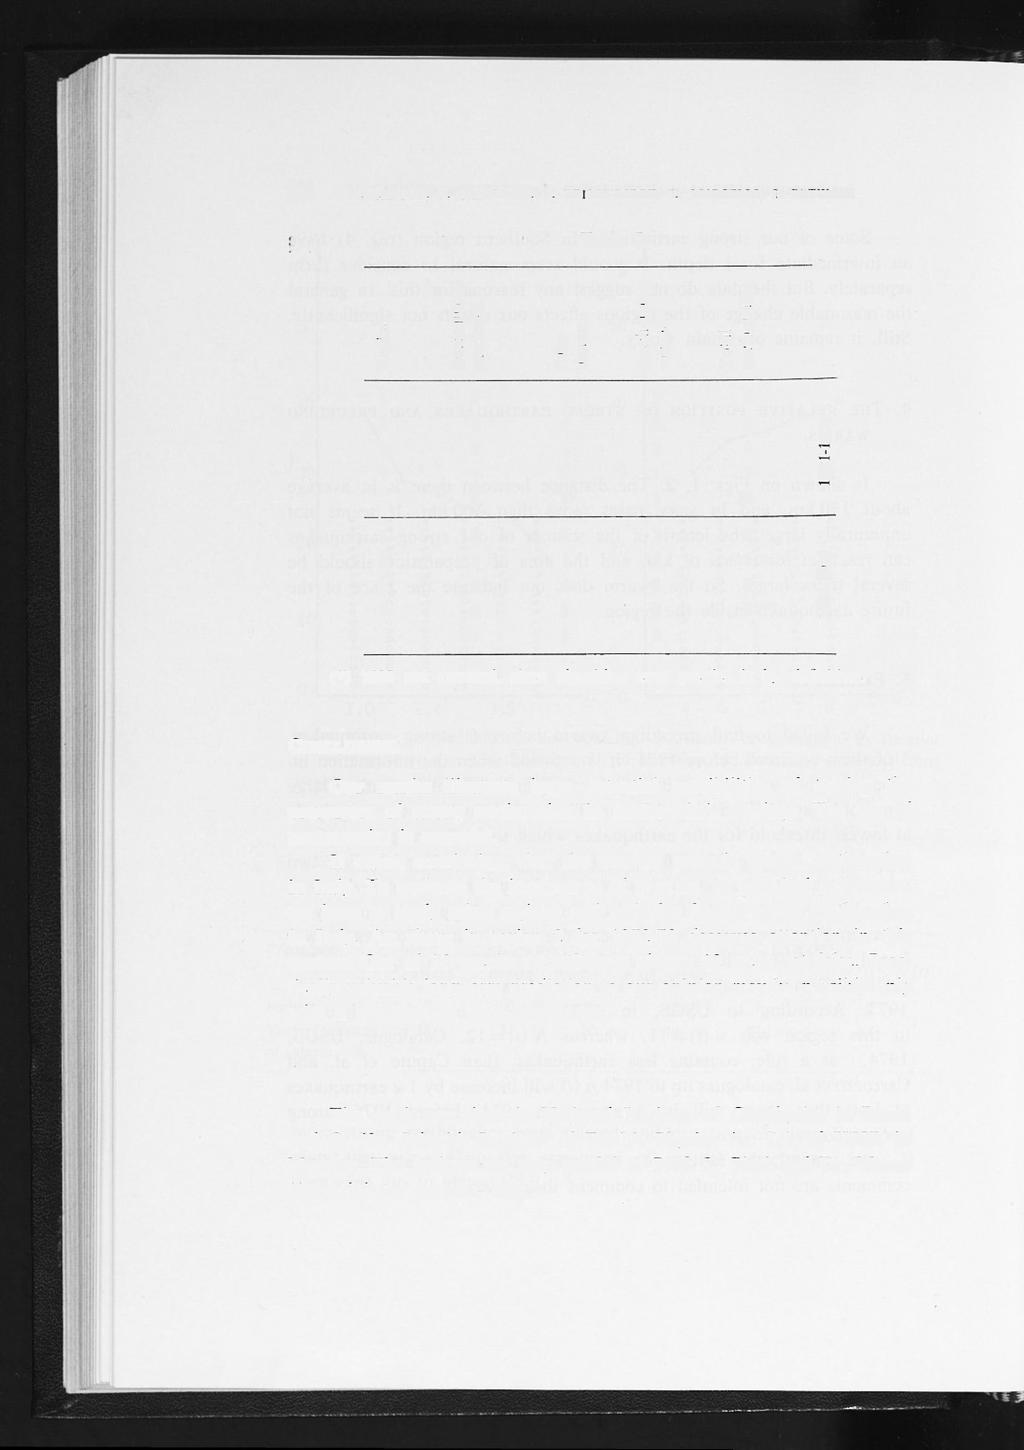 8 M. CAPUTO, P. GASPERINI, V. KEILIS-BOROK, L. MARCELLI, I. ROTWAIN TABLE 5.